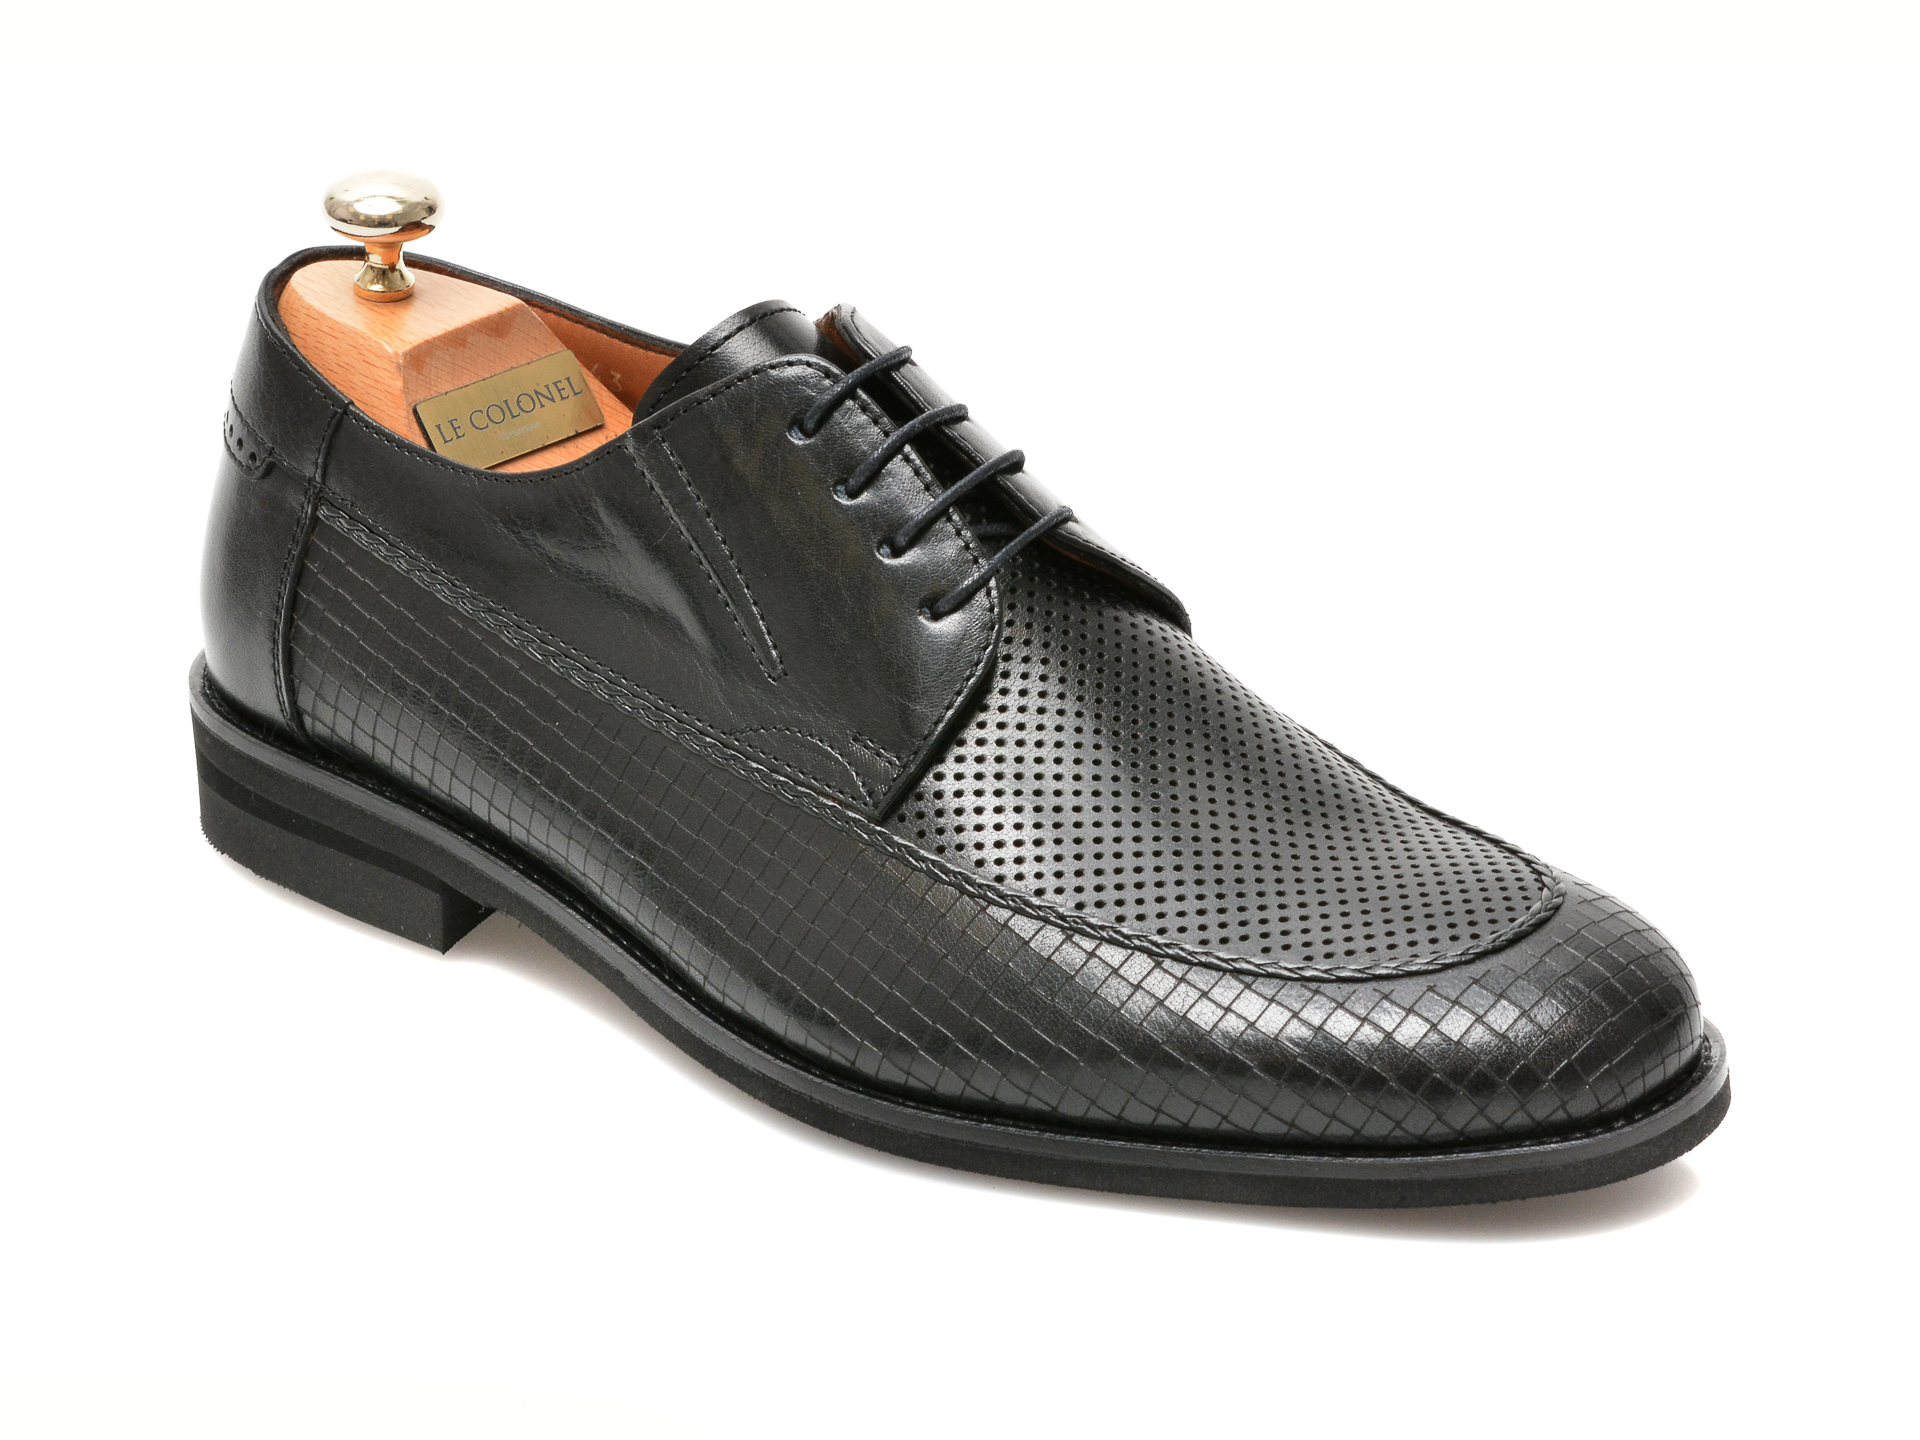 Pantofi LE COLONEL negri, 48856, din piele naturala Le Colonel imagine 2022 13clothing.ro